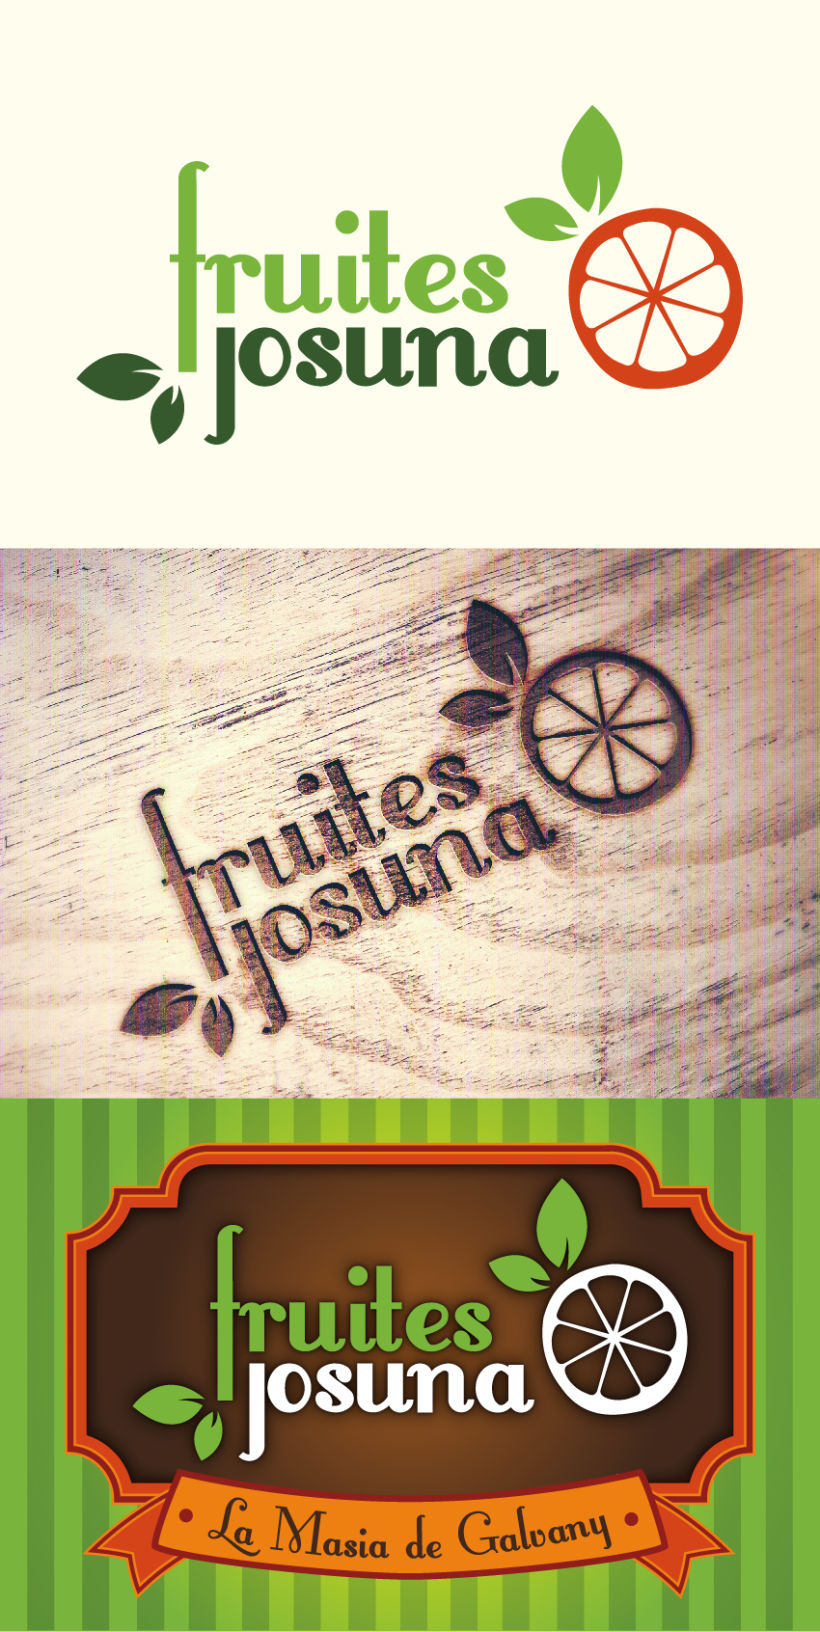 Logotipo Fruites Josuna  -1